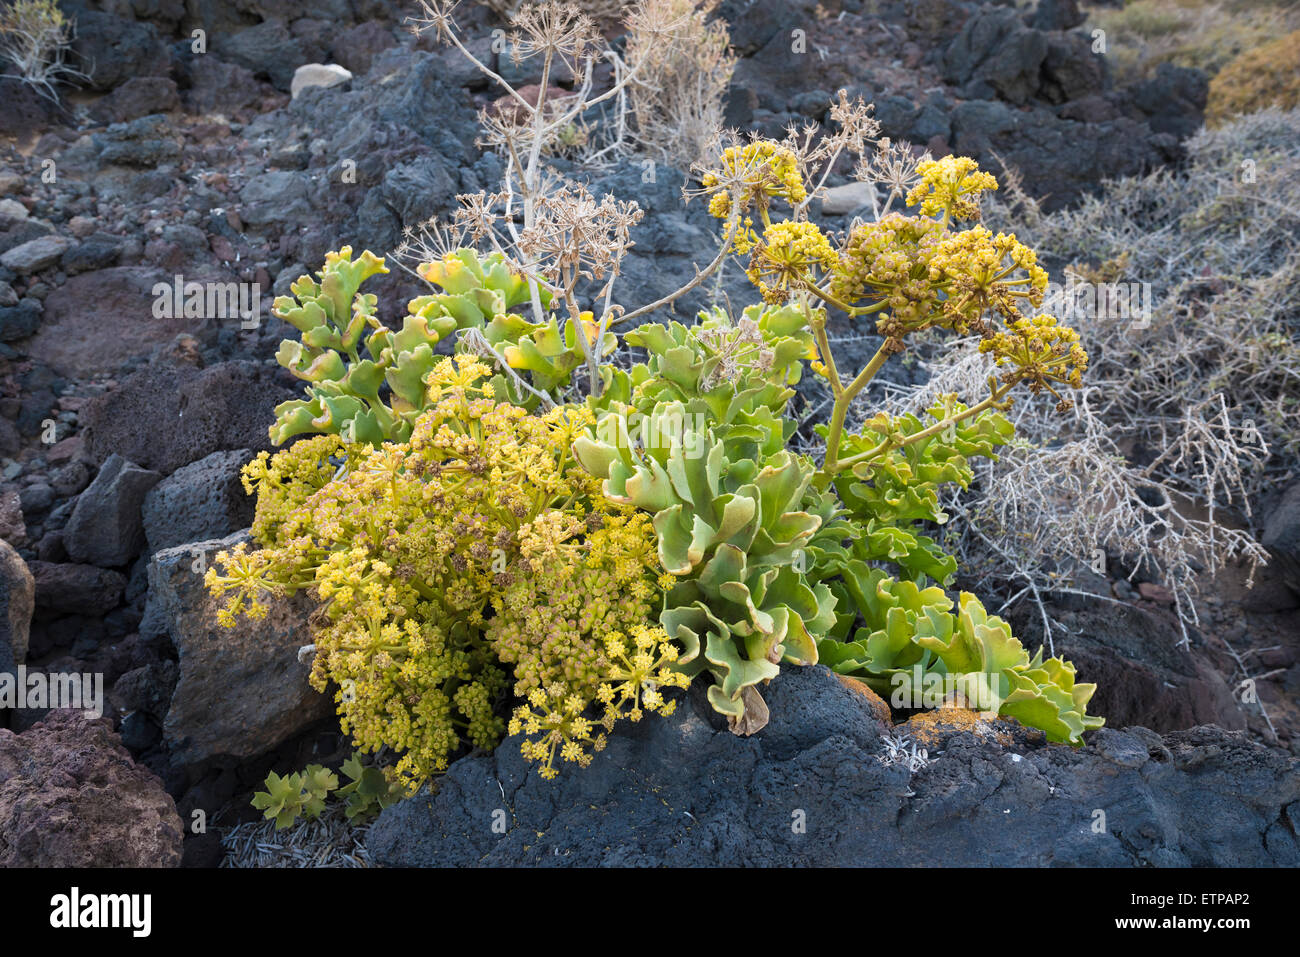 Astydamia latifolia (lechuga de mar, sea lettuce, servilleta) flowering in March at Costa del Silencio, Tenerife, Canary Islands Stock Photo